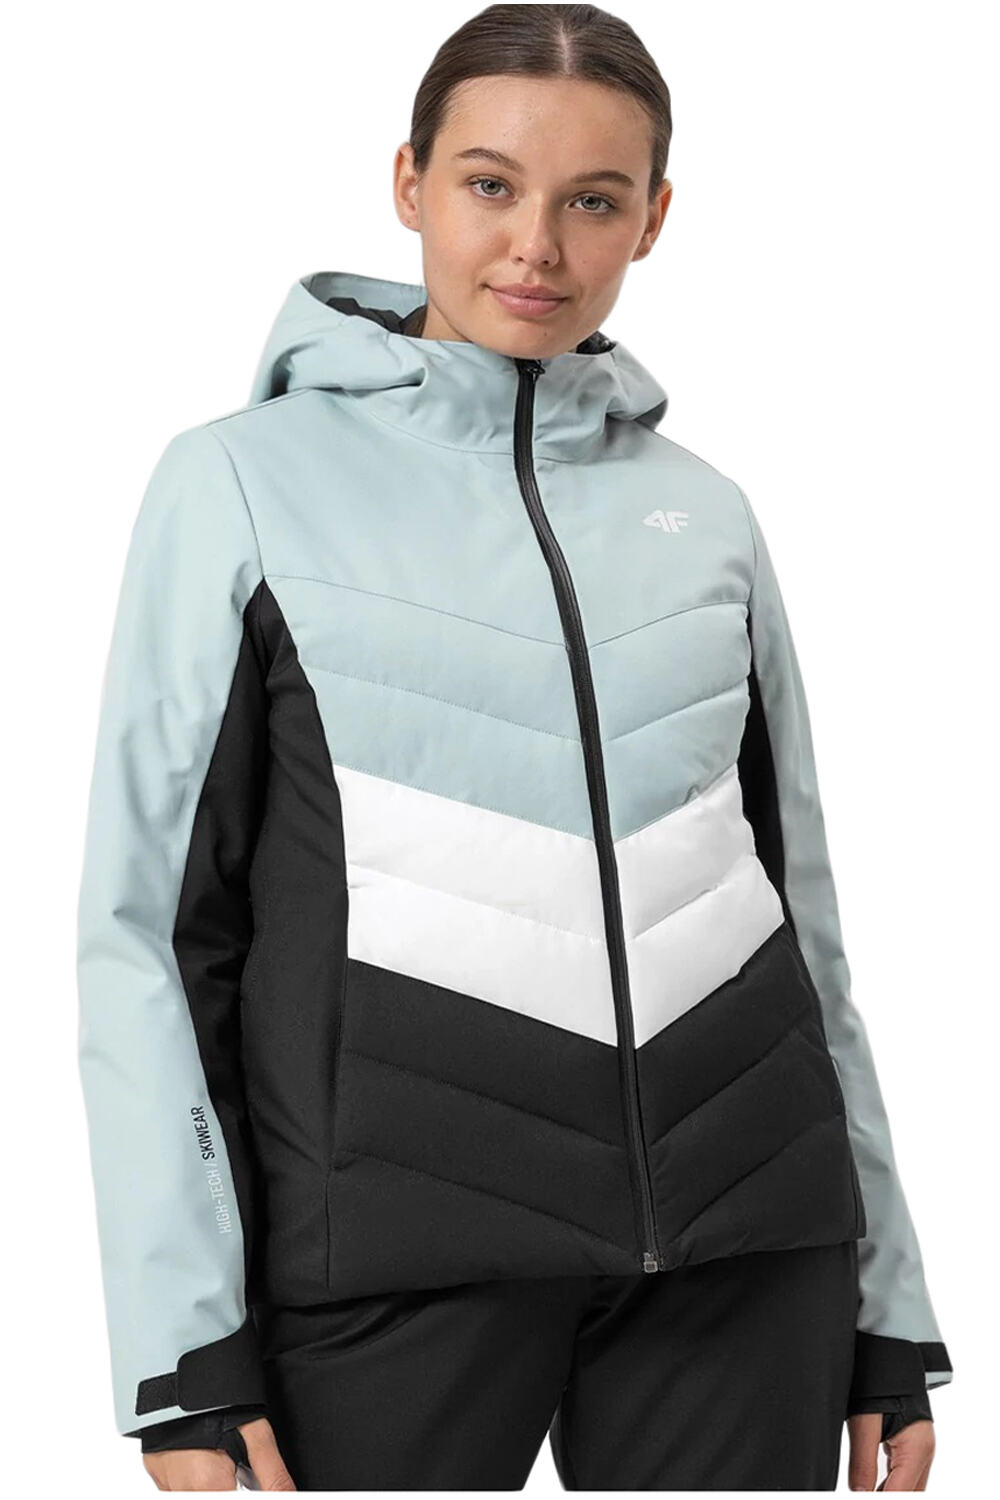 4f chaqueta esquí mujer WOMEN'S SKI JACKET KUDN006 vista frontal